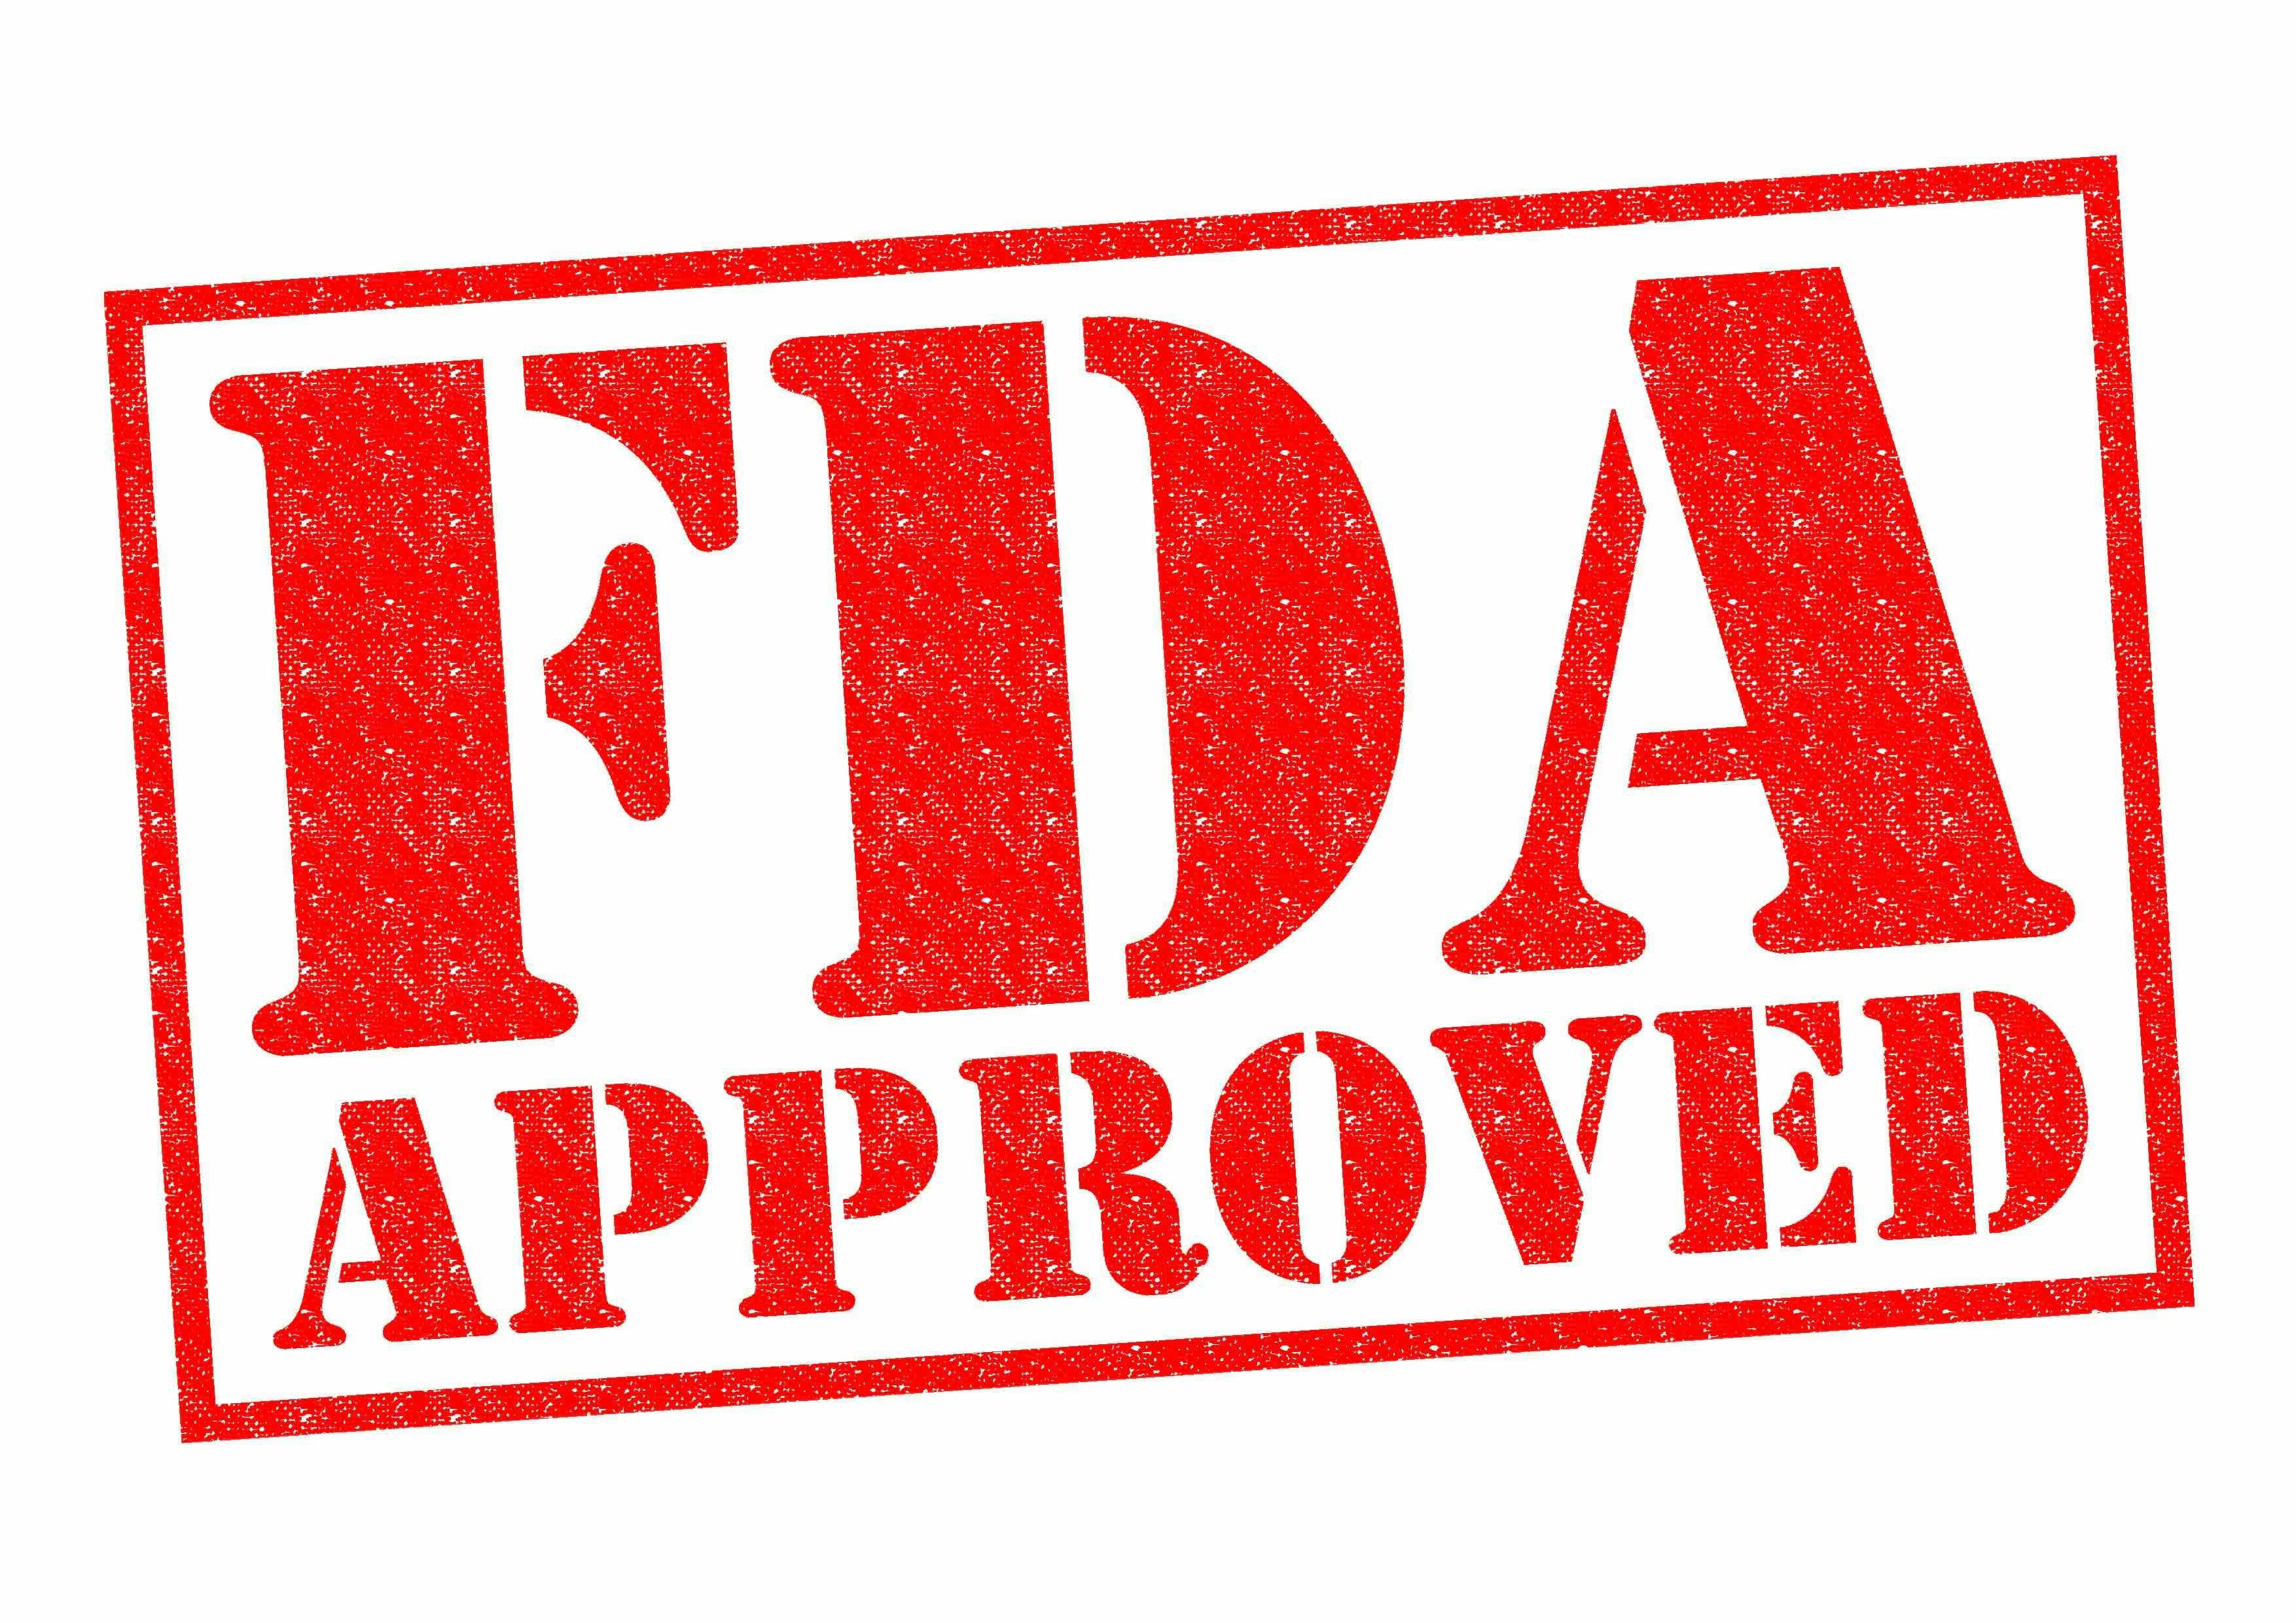 FDA approved | Image Credit: © chrisdorney - stock.adobe.com